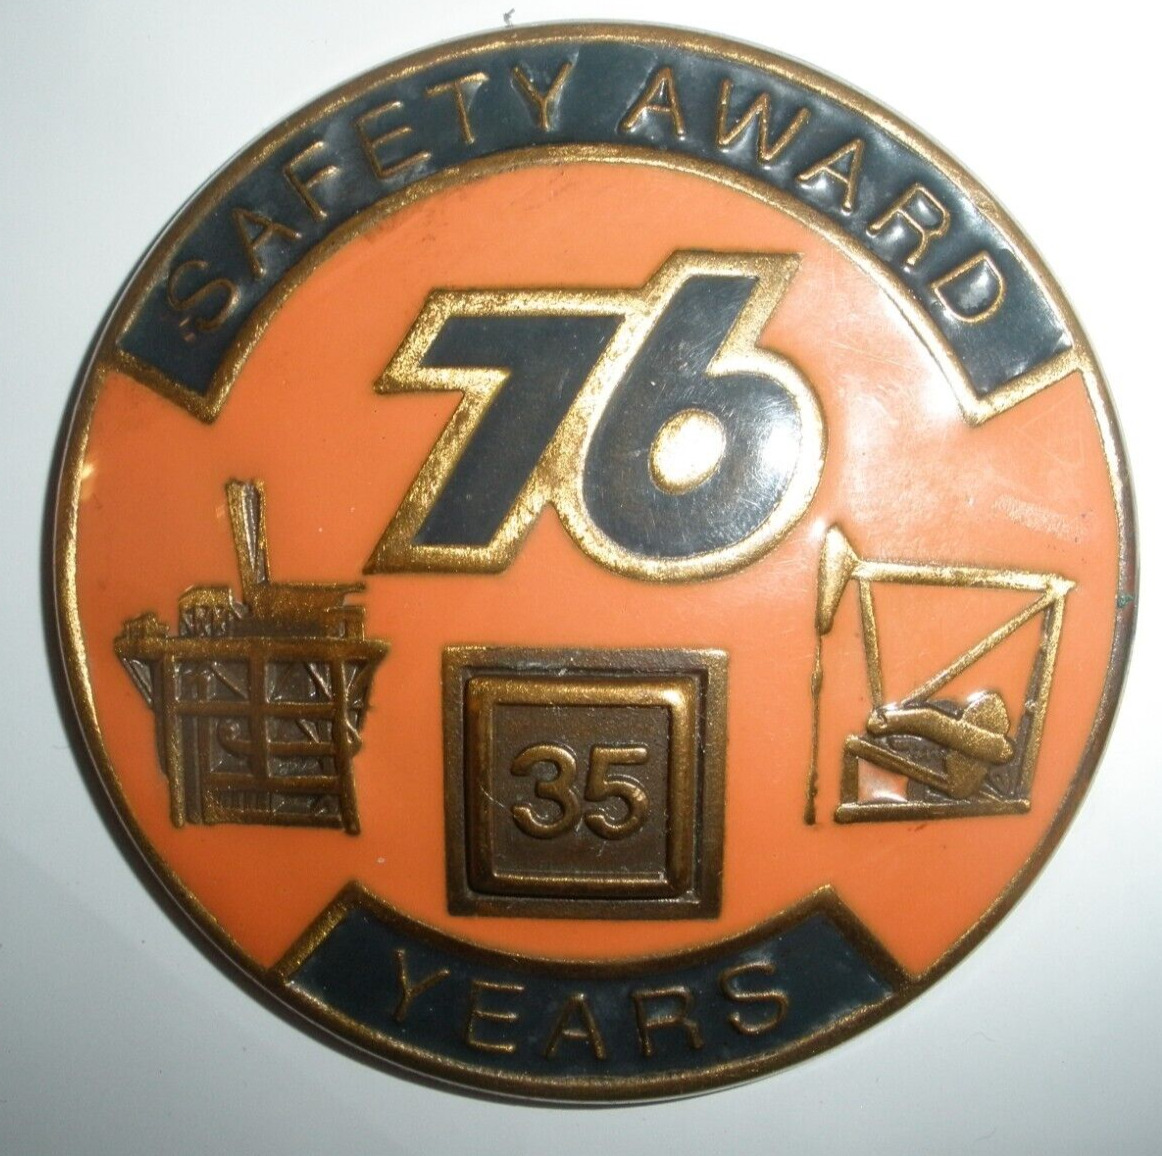 Union 76 Unocal 35 Years Safety Award Enamel Badge Oil Derrick Rig Vintage